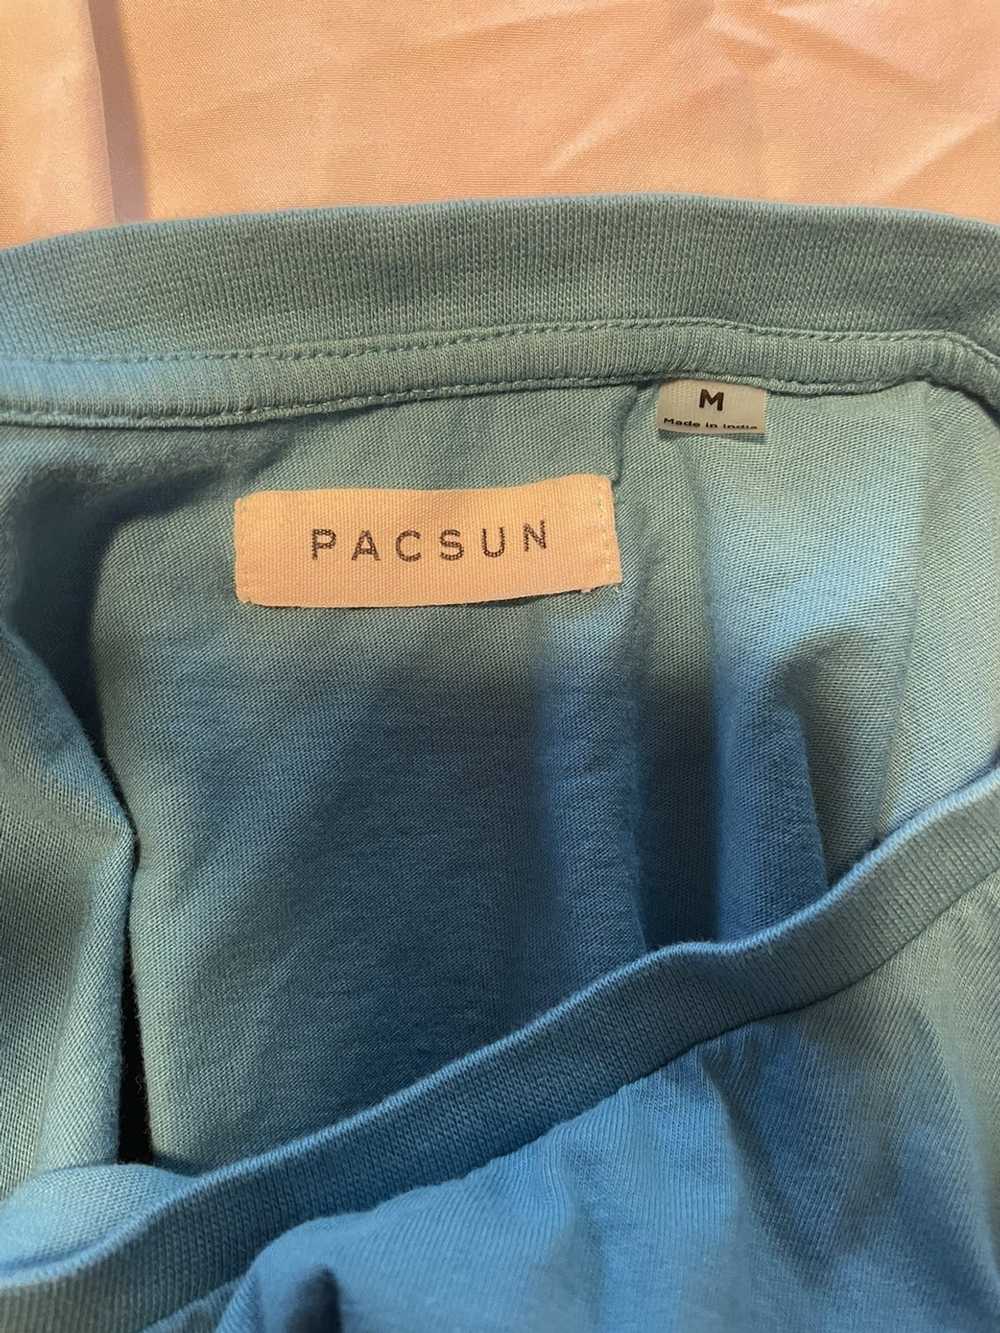 Pacsun Long Sleeve Rocky Mountain T-Shirt - image 3